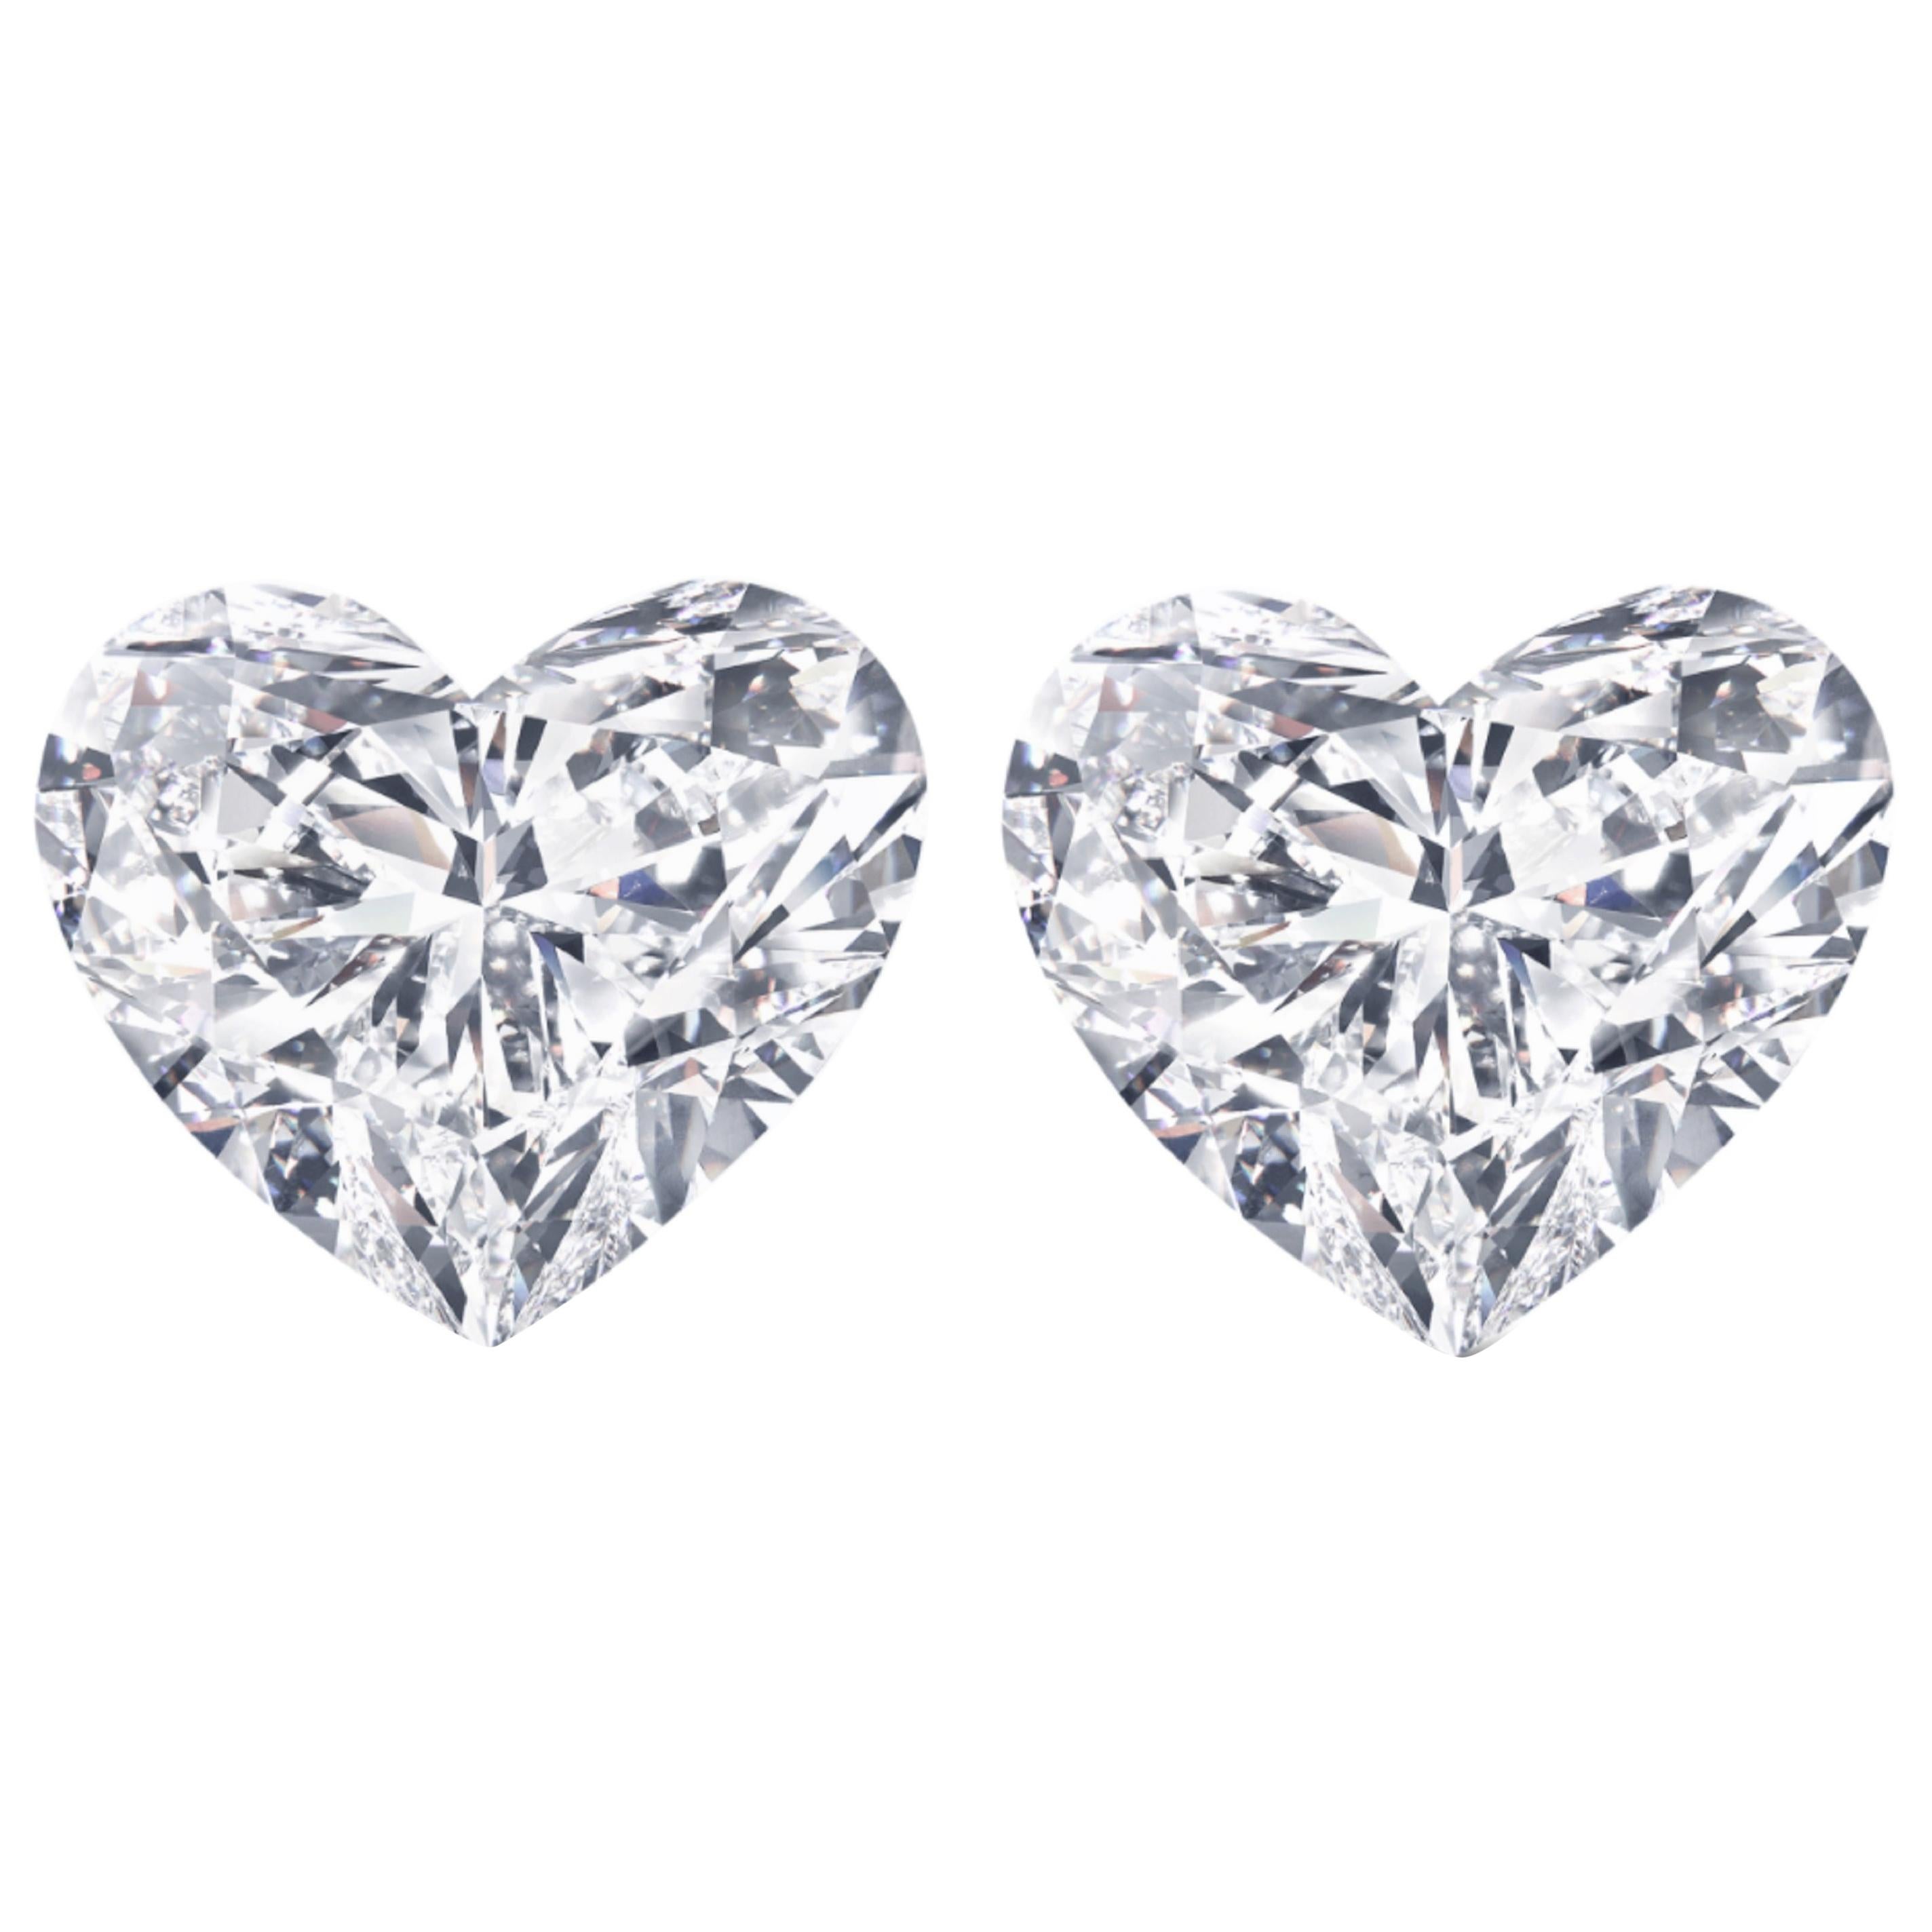 INTERNALLY FLAWLESS D Color GIA Certified 2.14 Carat Heart Shape Diamond Studs